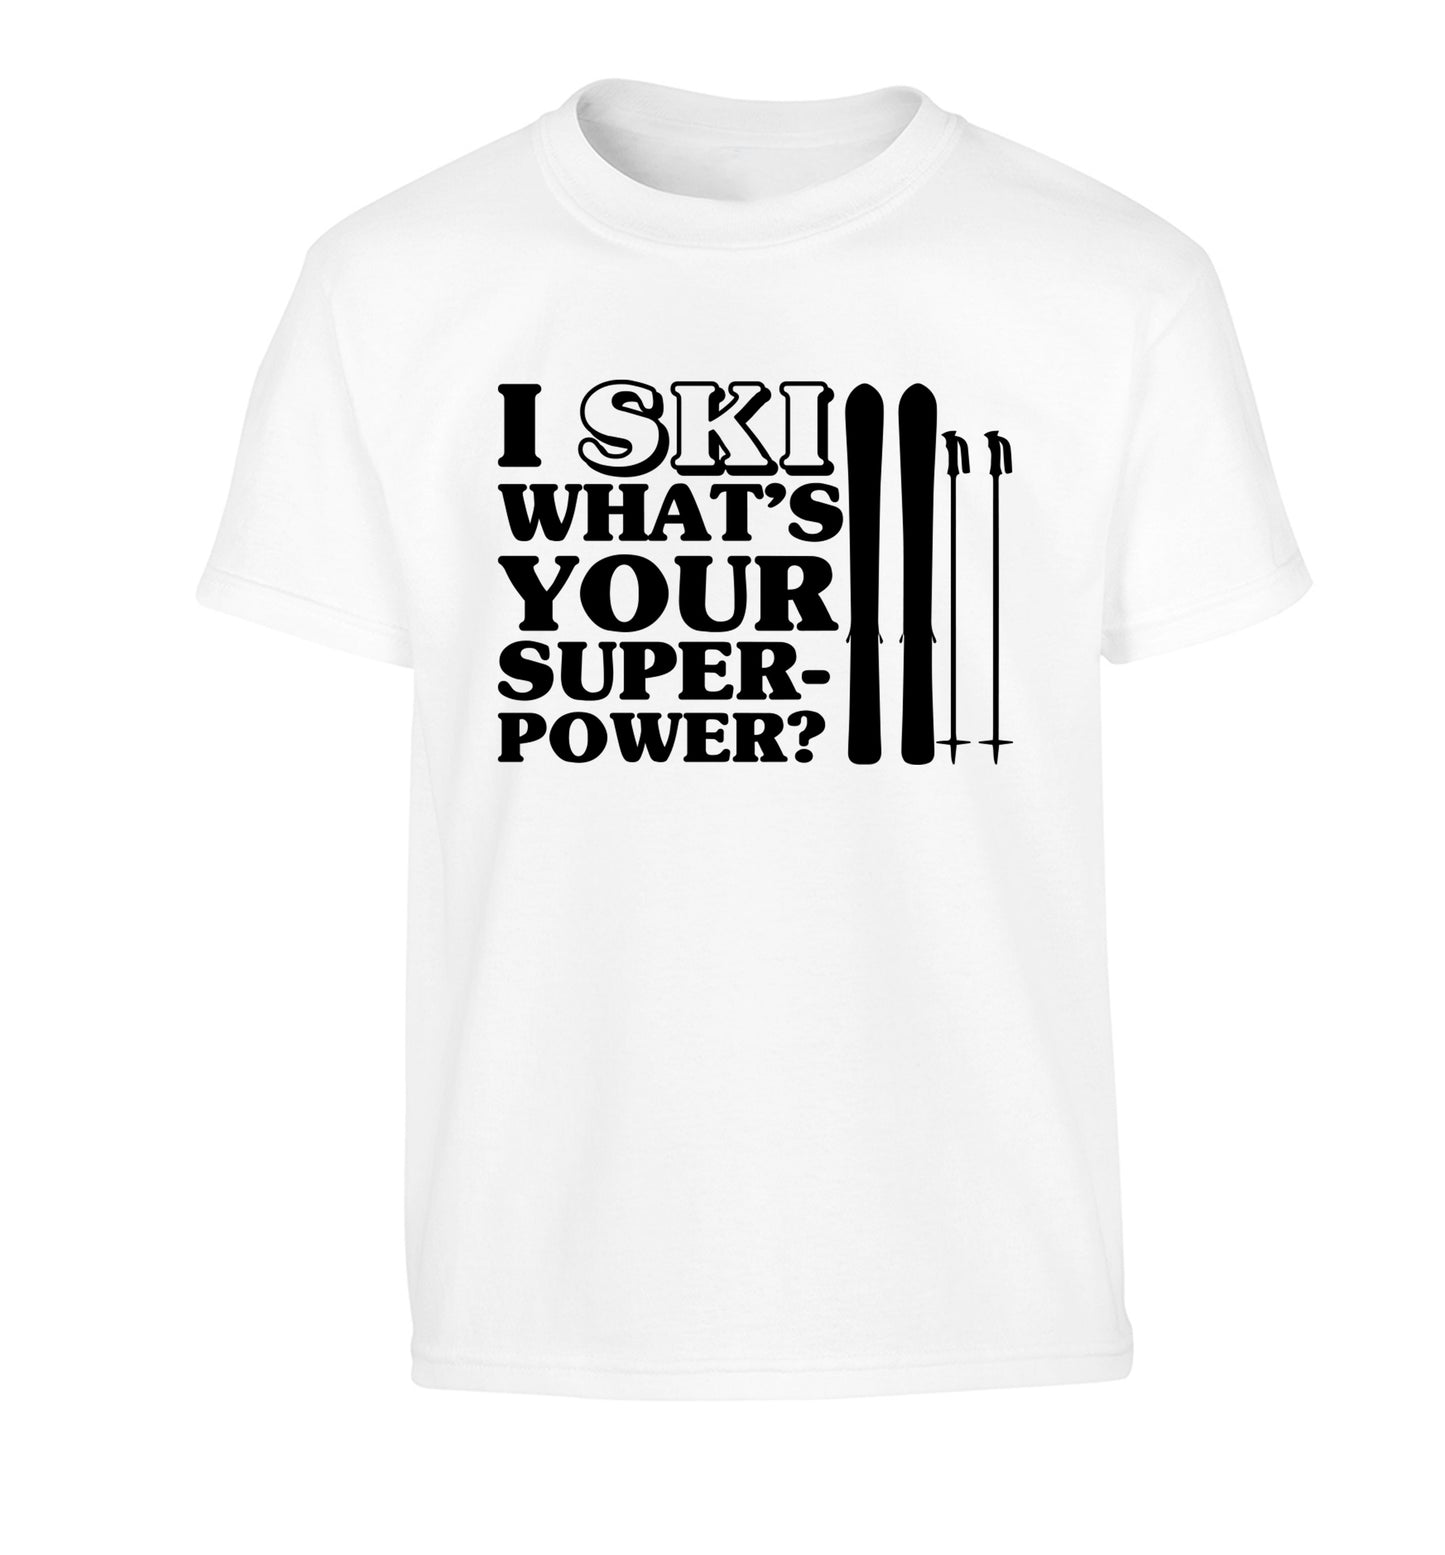 I ski what's your superpower? Children's white Tshirt 12-14 Years